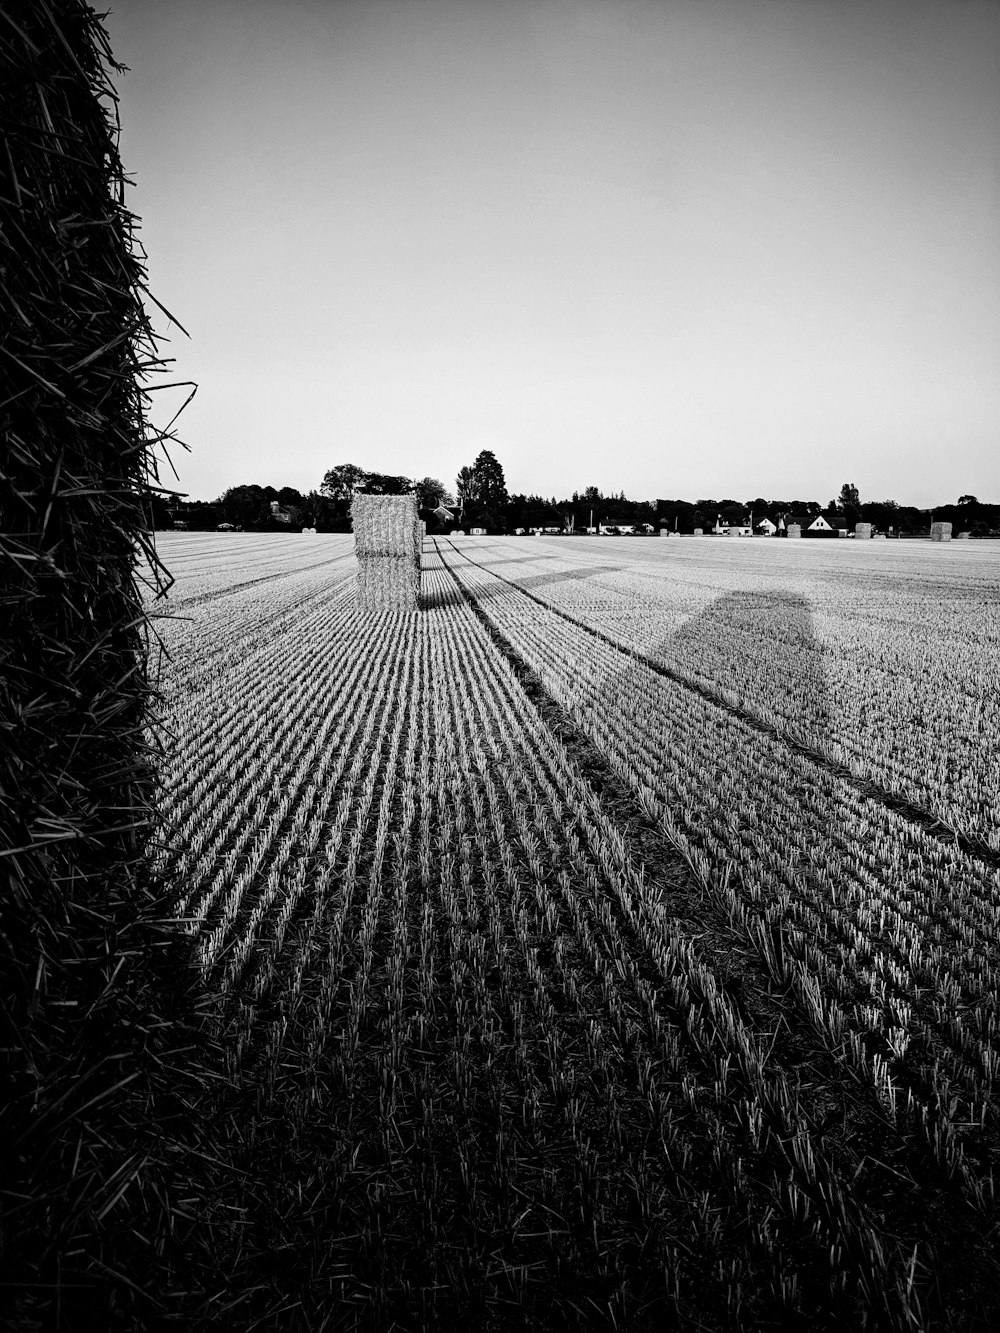 grayscale photo of a farm field